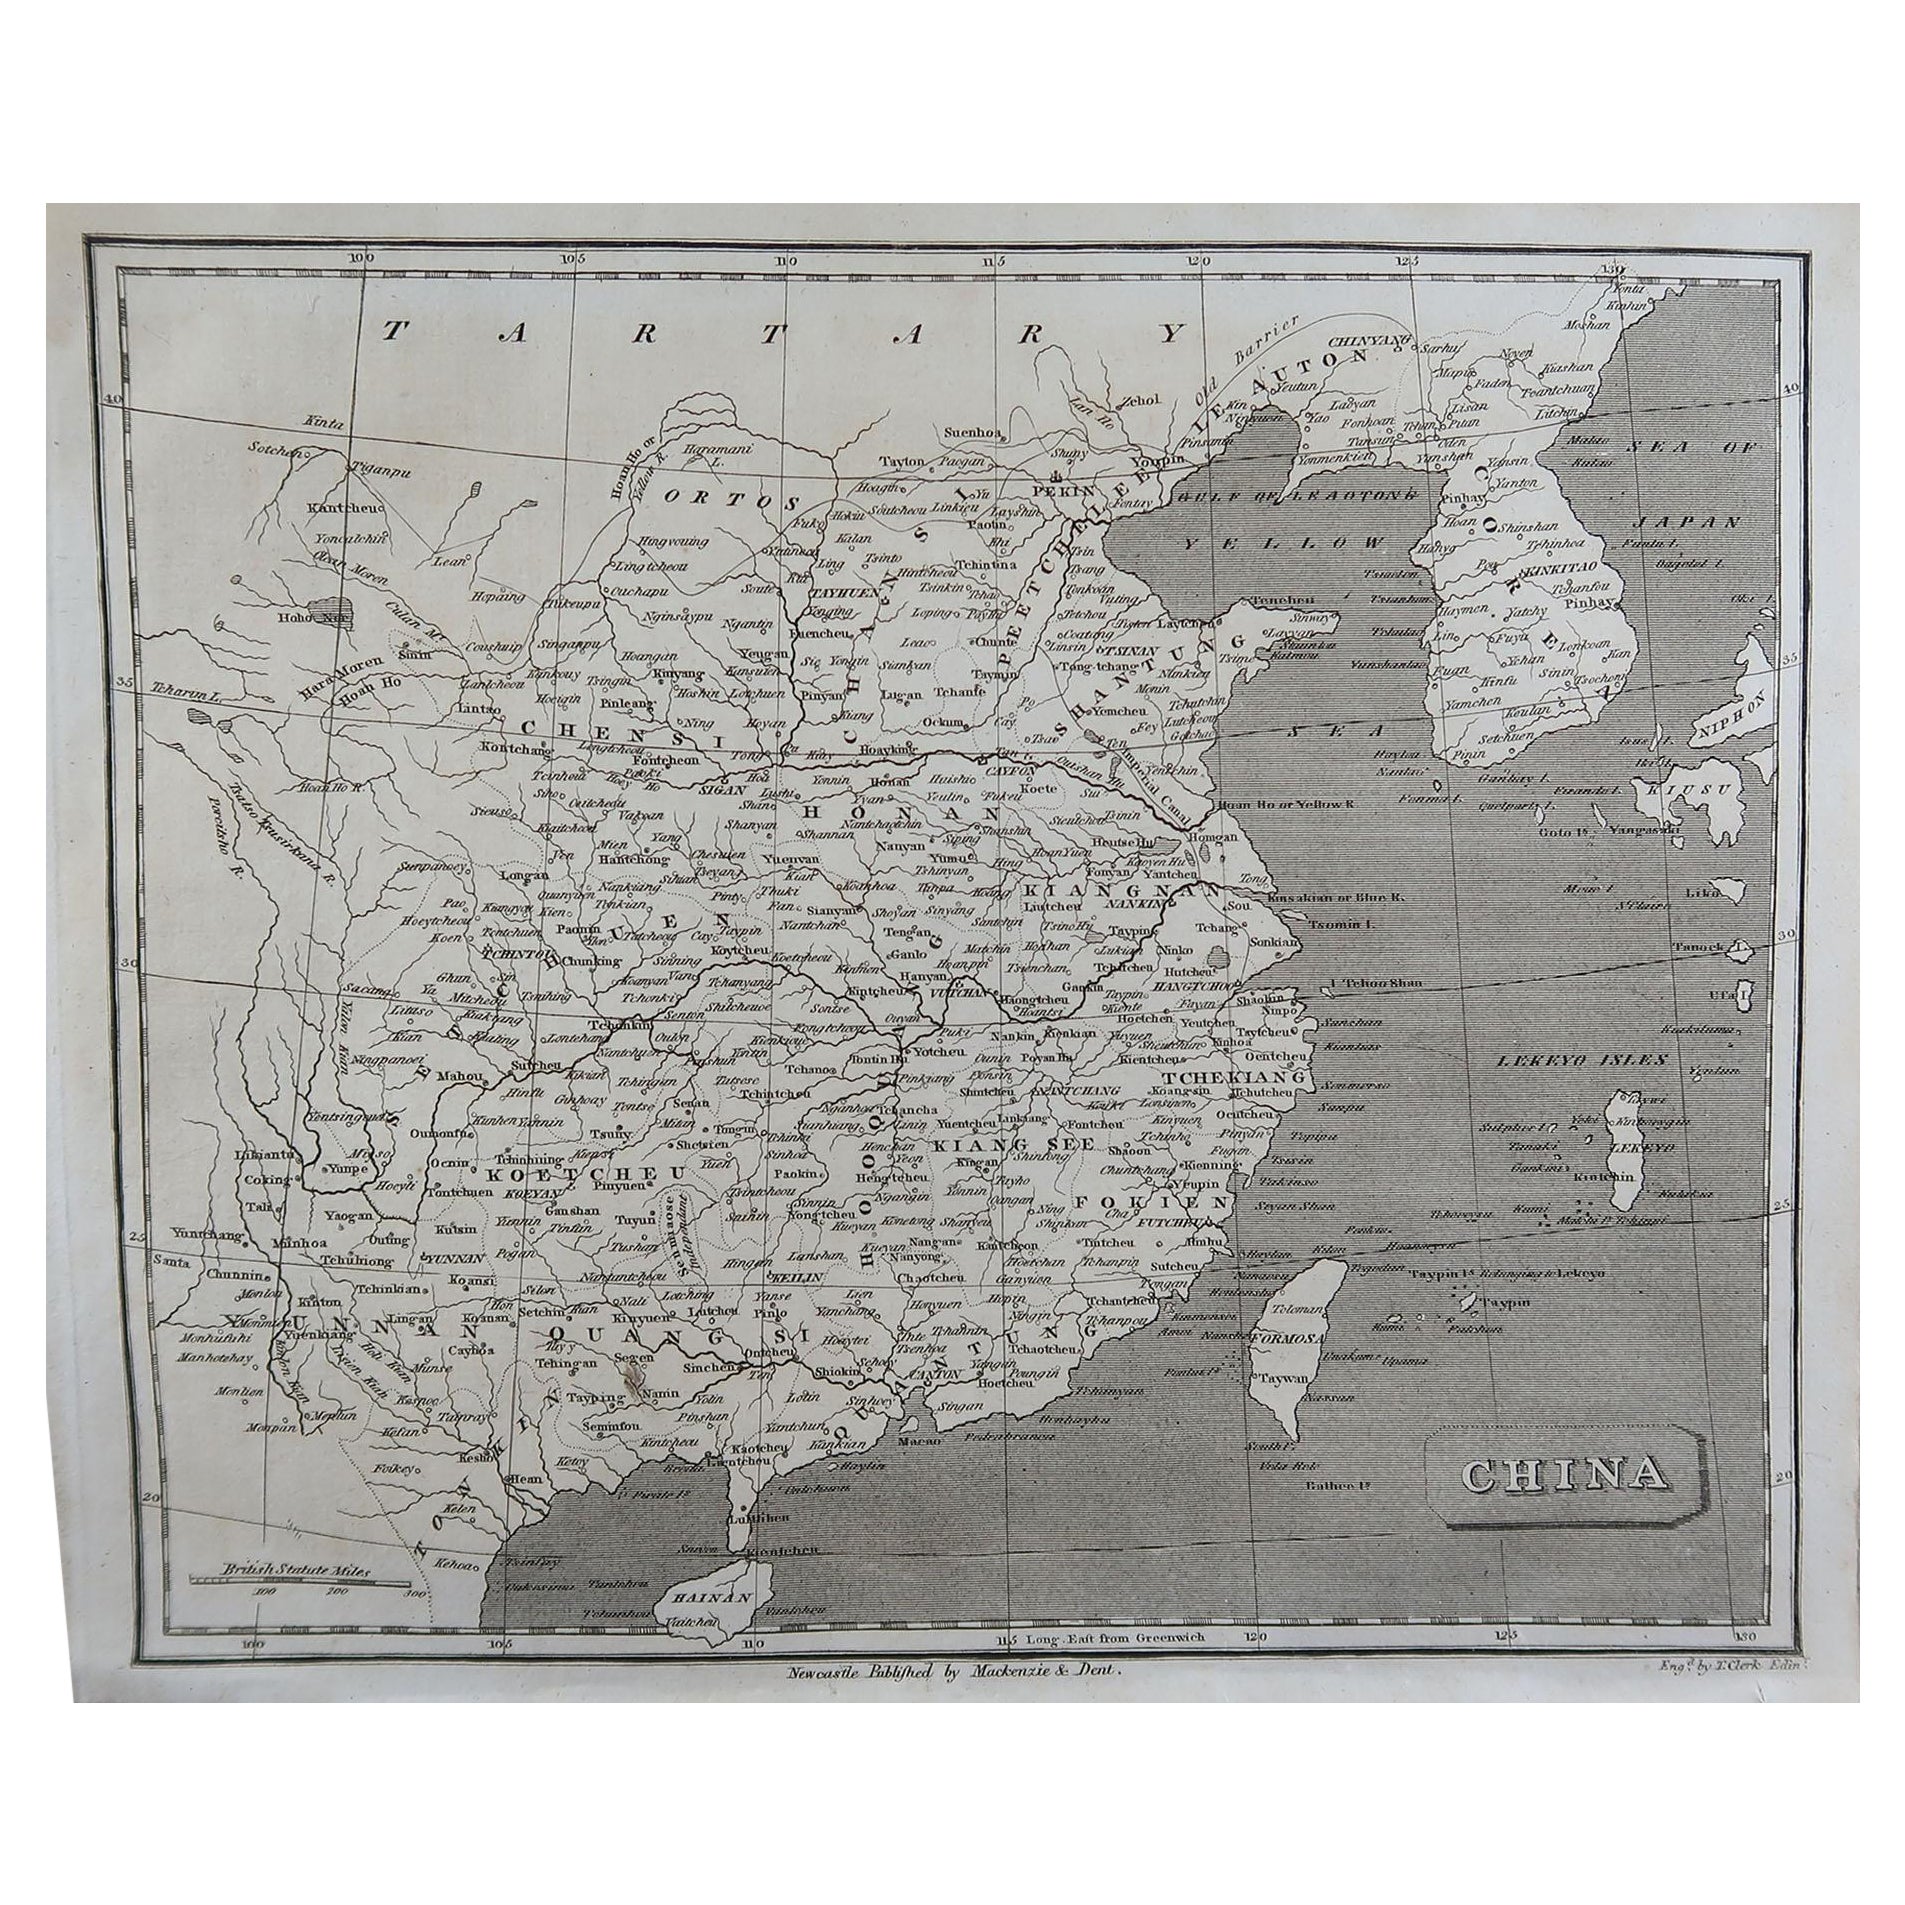 Original Antique Map of China by Thomas Clerk, 1817